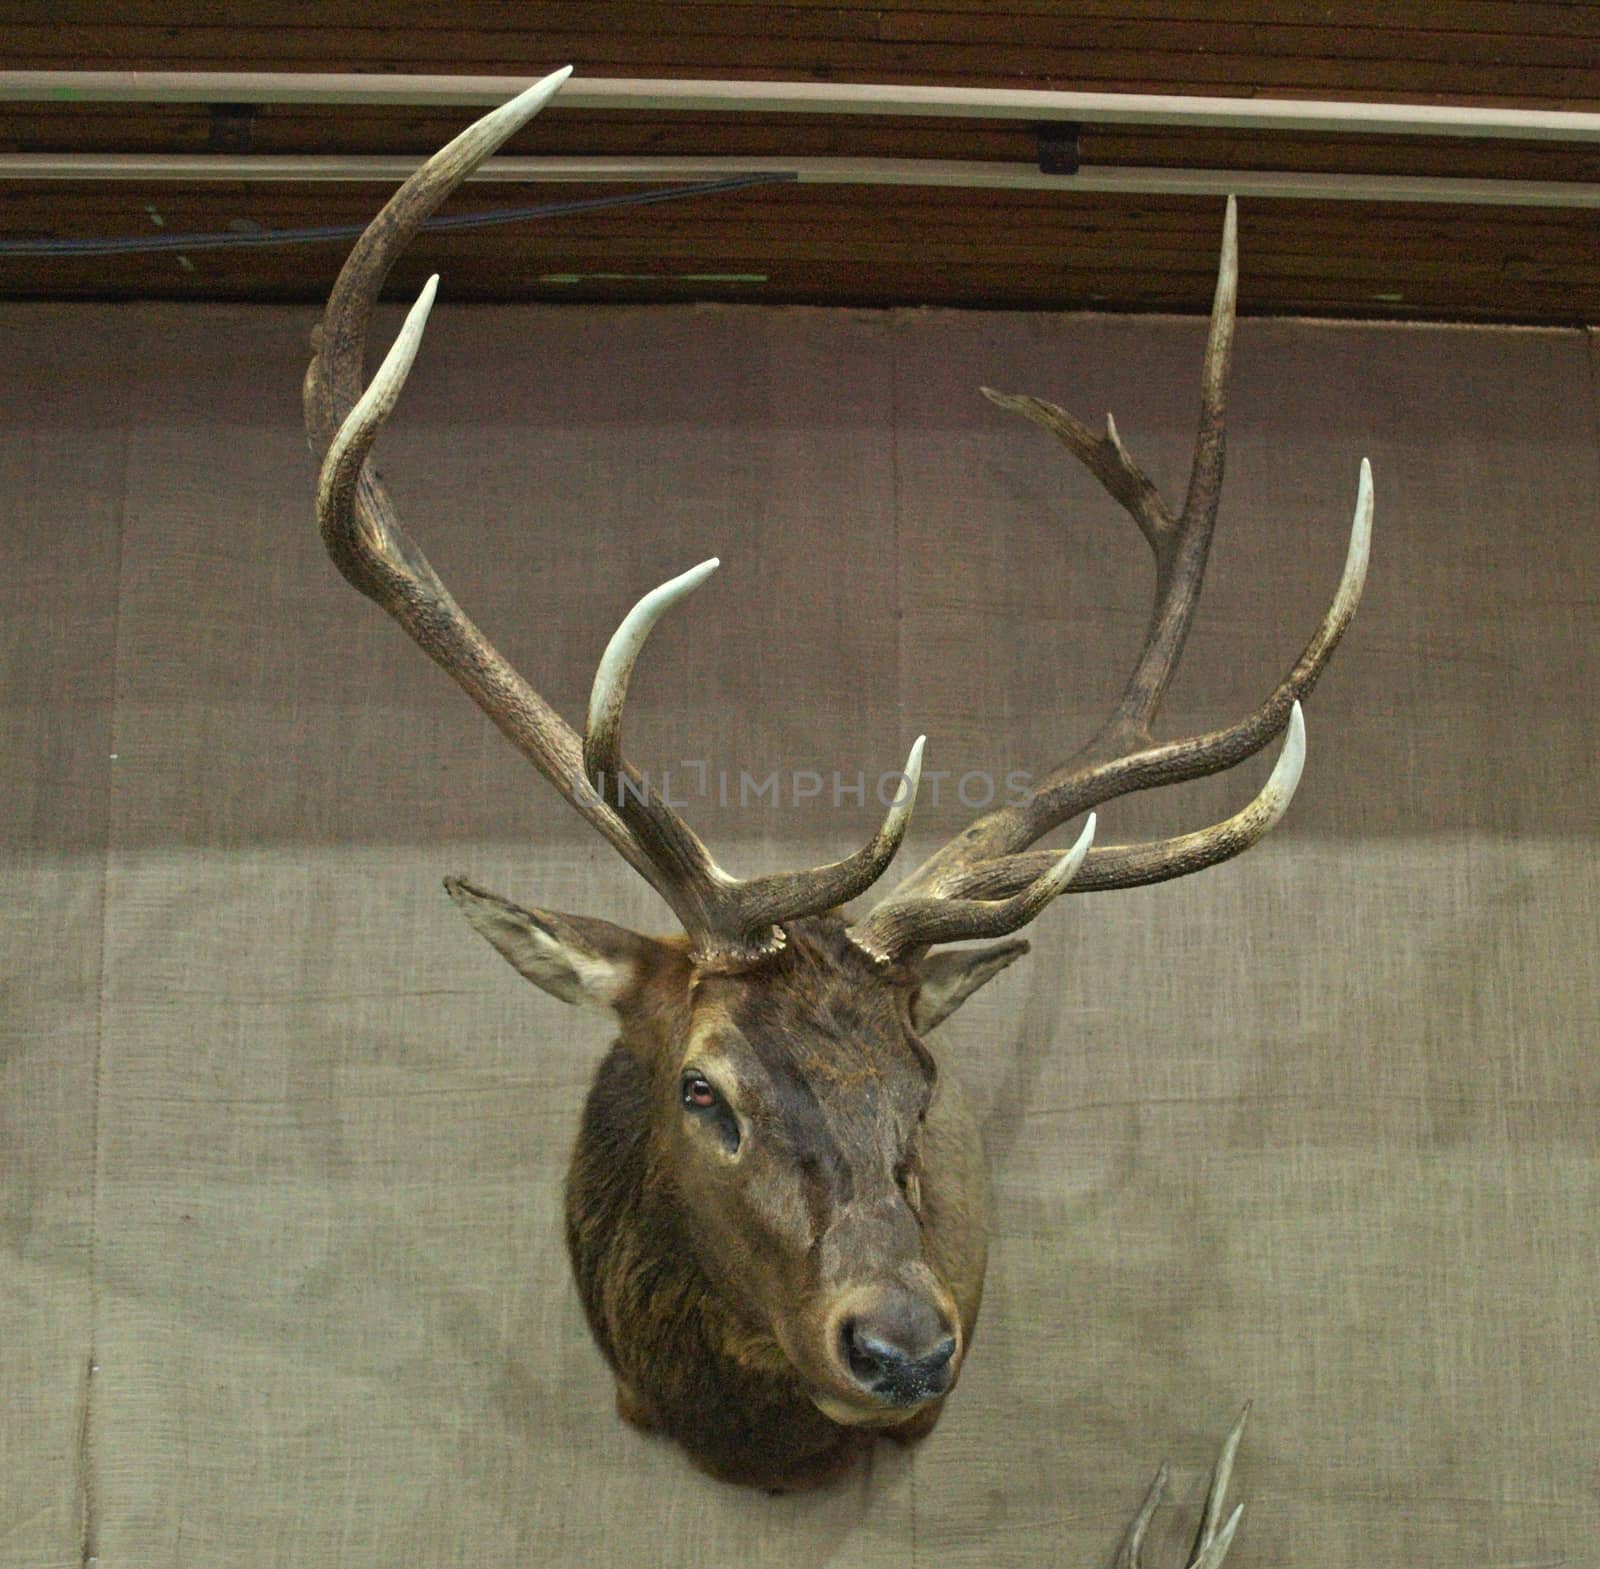 Stuffed animal head hanging on wall as trophy by sheriffkule